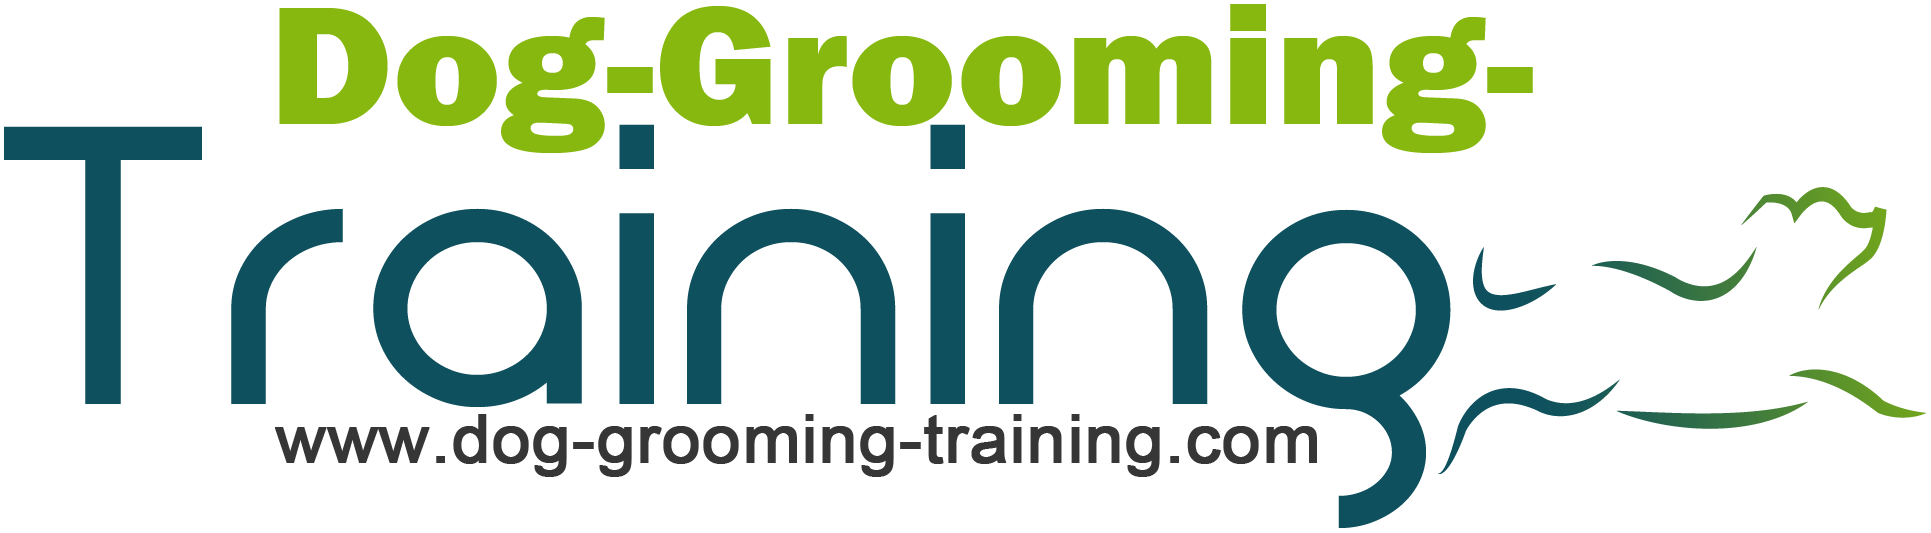 Dog Grooming Training Logo